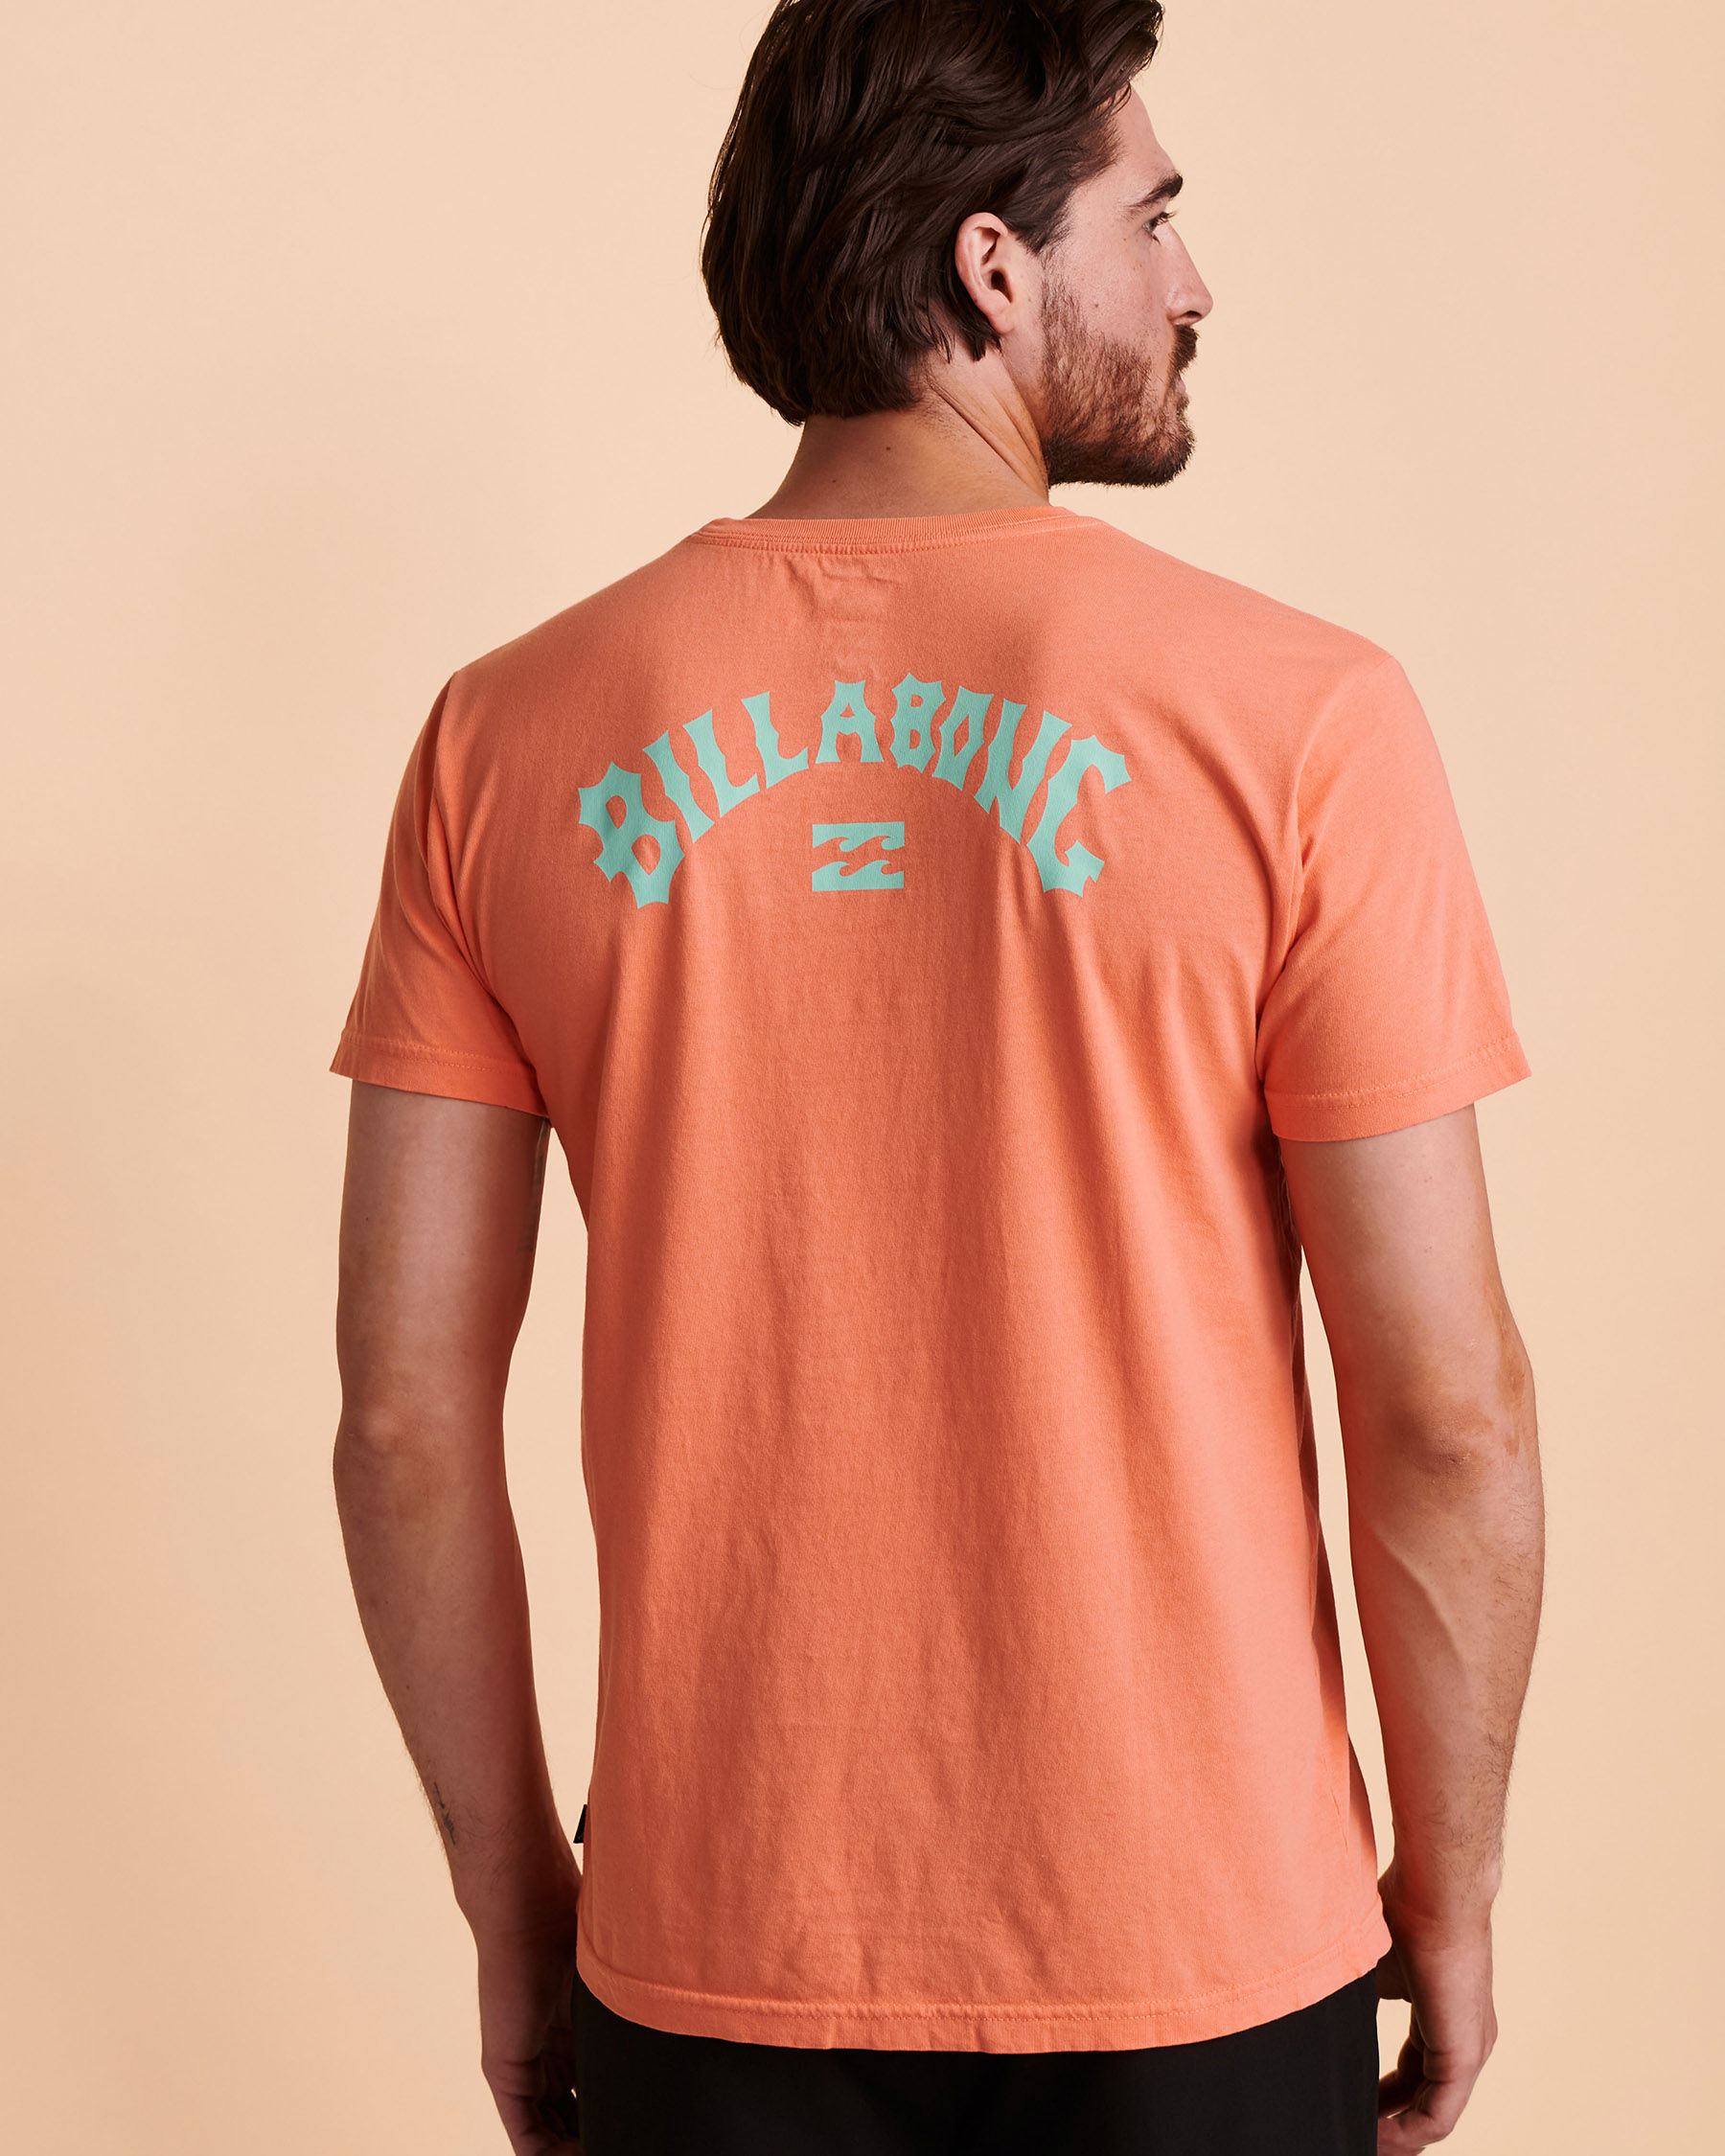 BILLABONG T-shirt Orange MT132BAW - View2